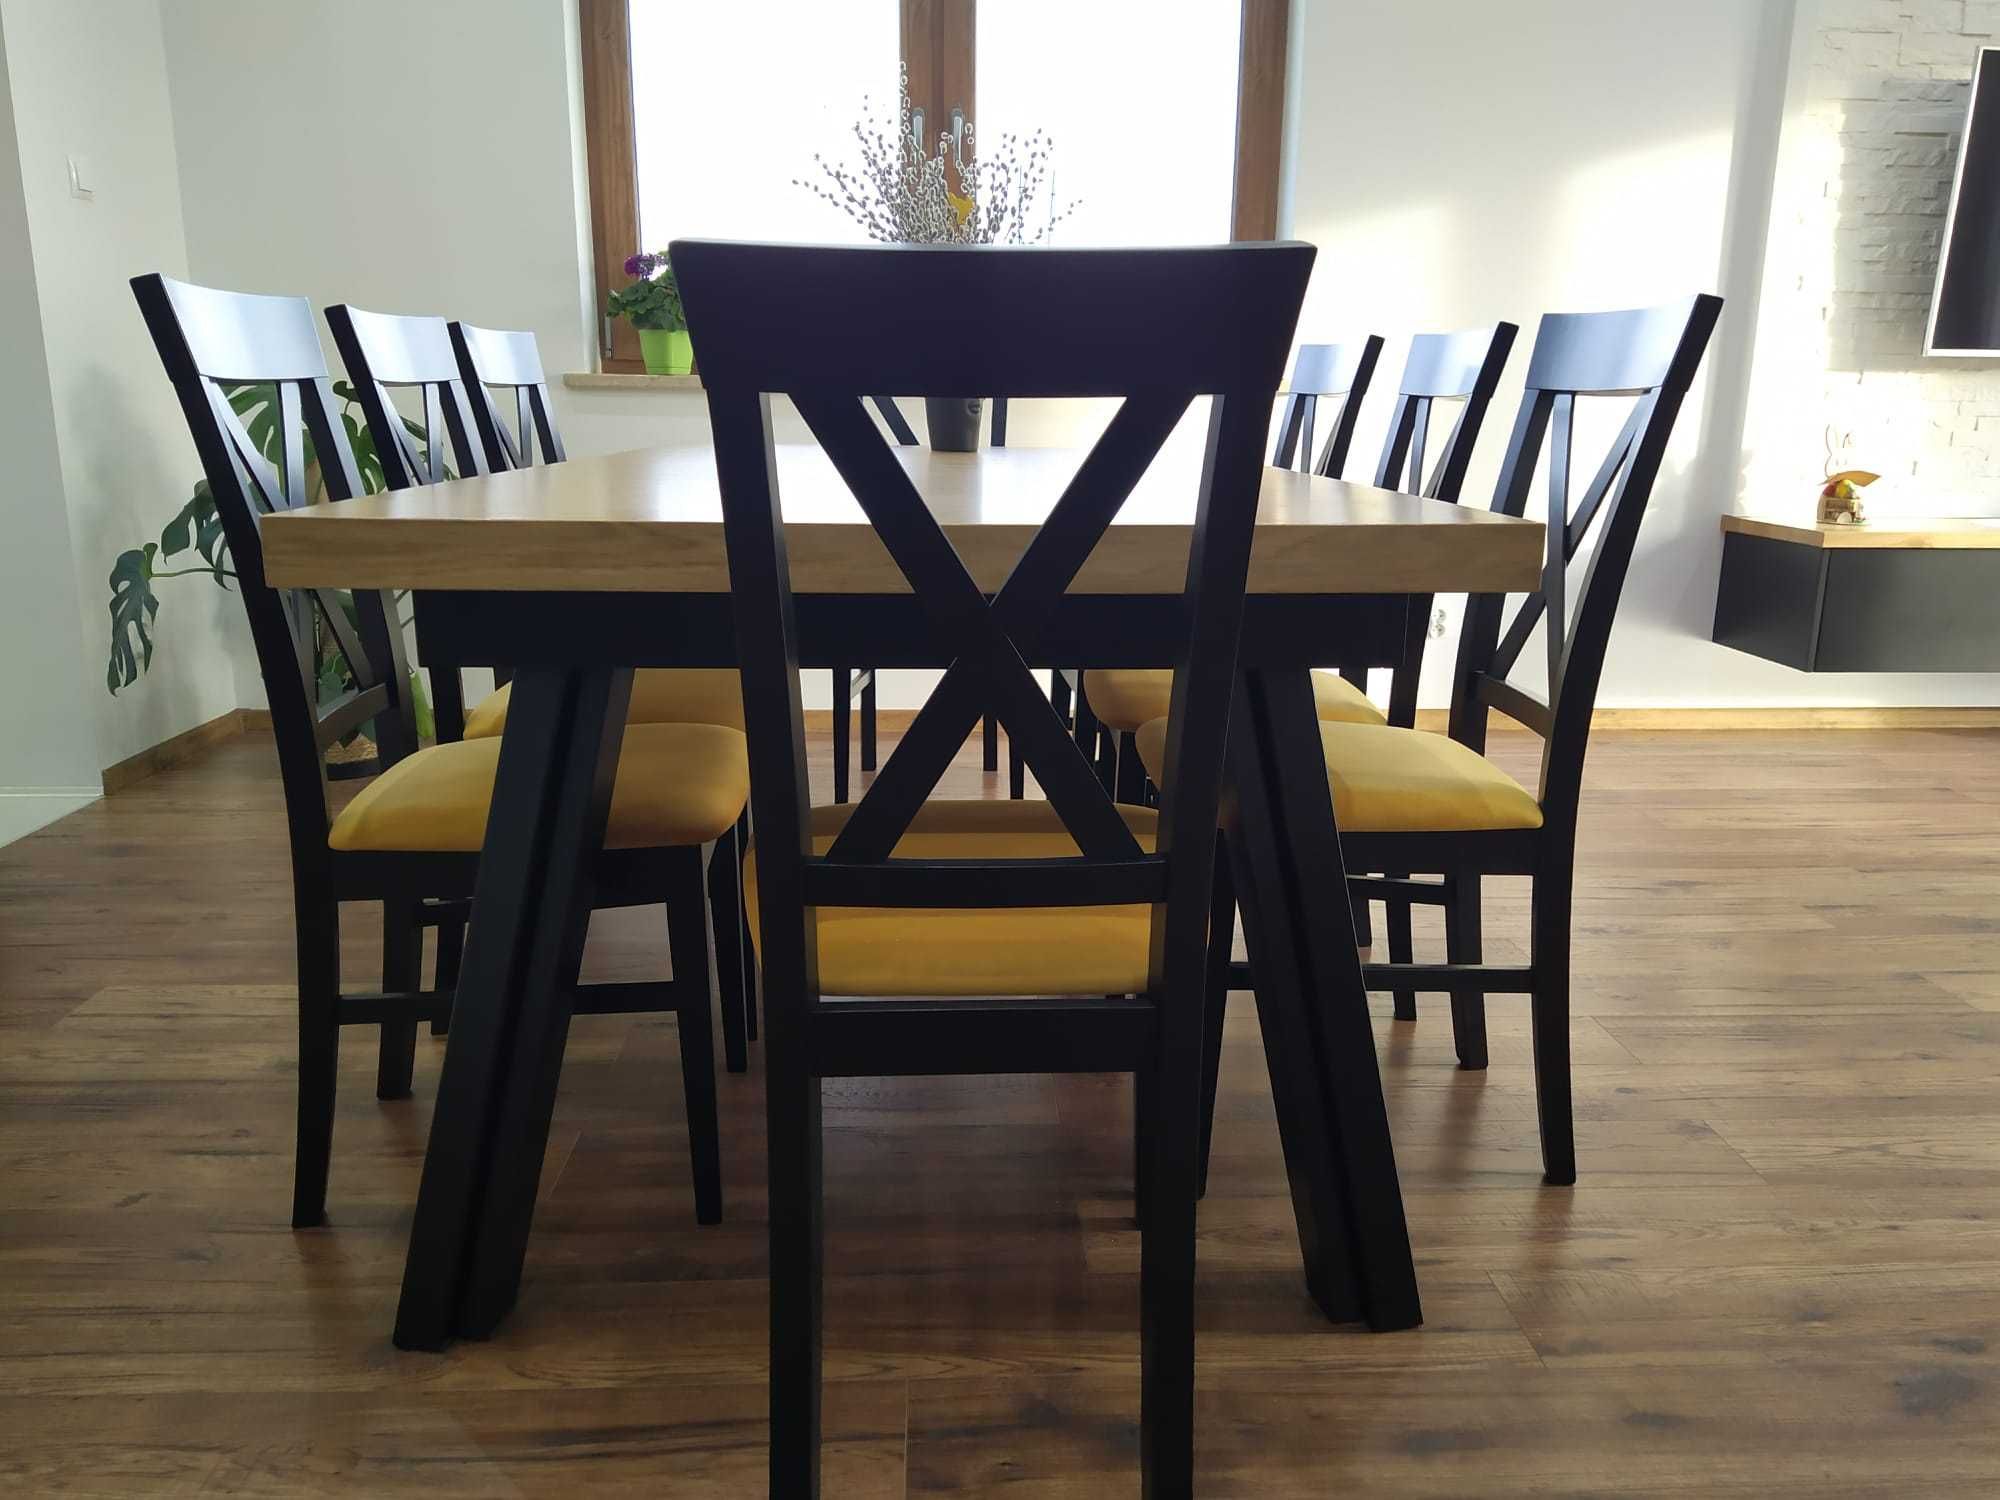 krzesła do kuchni jadalni mocne nowe  buk dab Producent